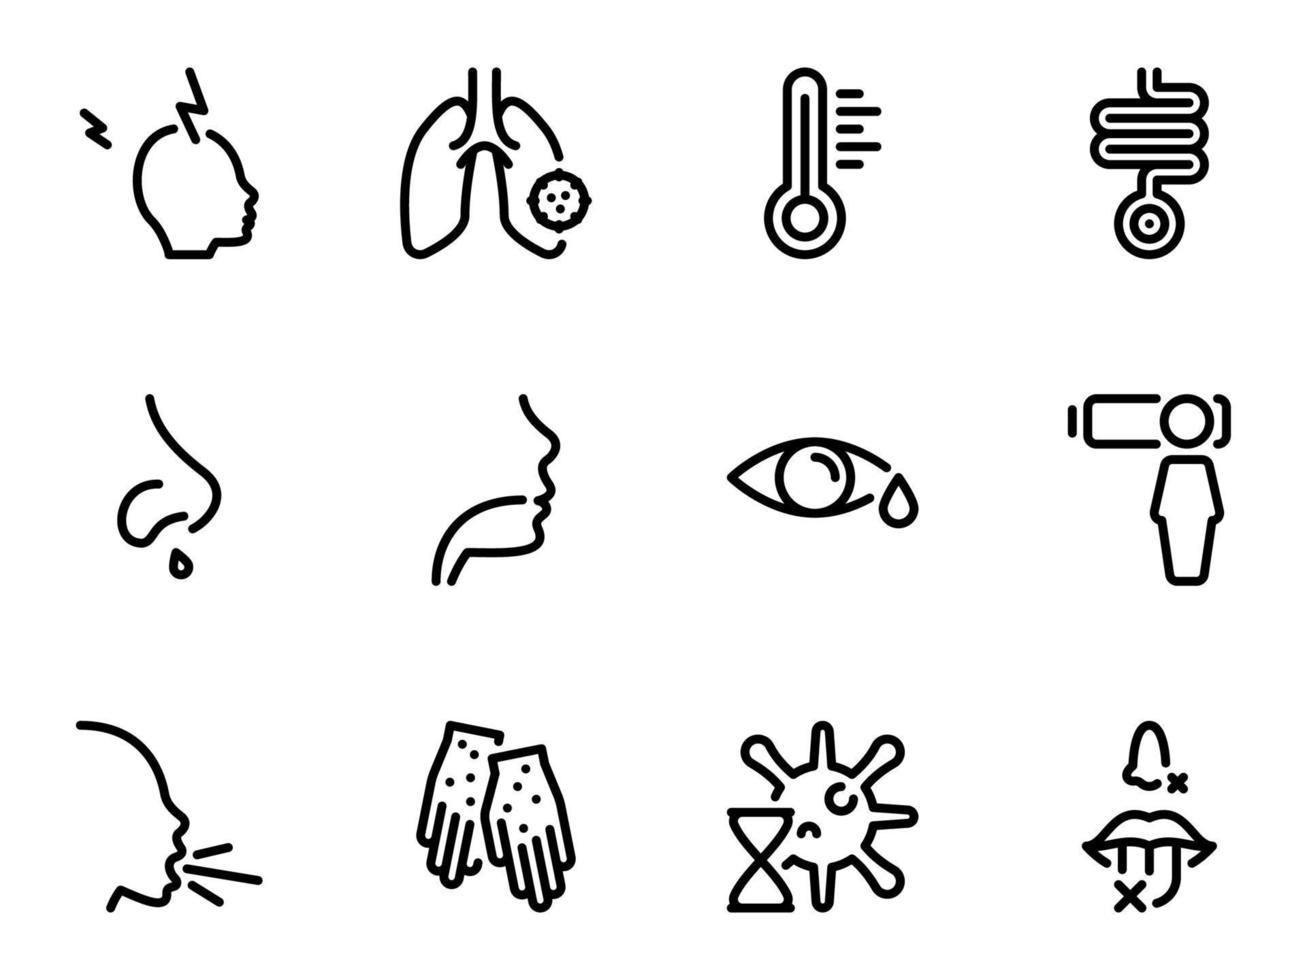 conjunto de iconos de vector negro, aislado sobre fondo blanco. ilustración plana sobre un tema síntomas respiratorios, enfermedades, período de incubación